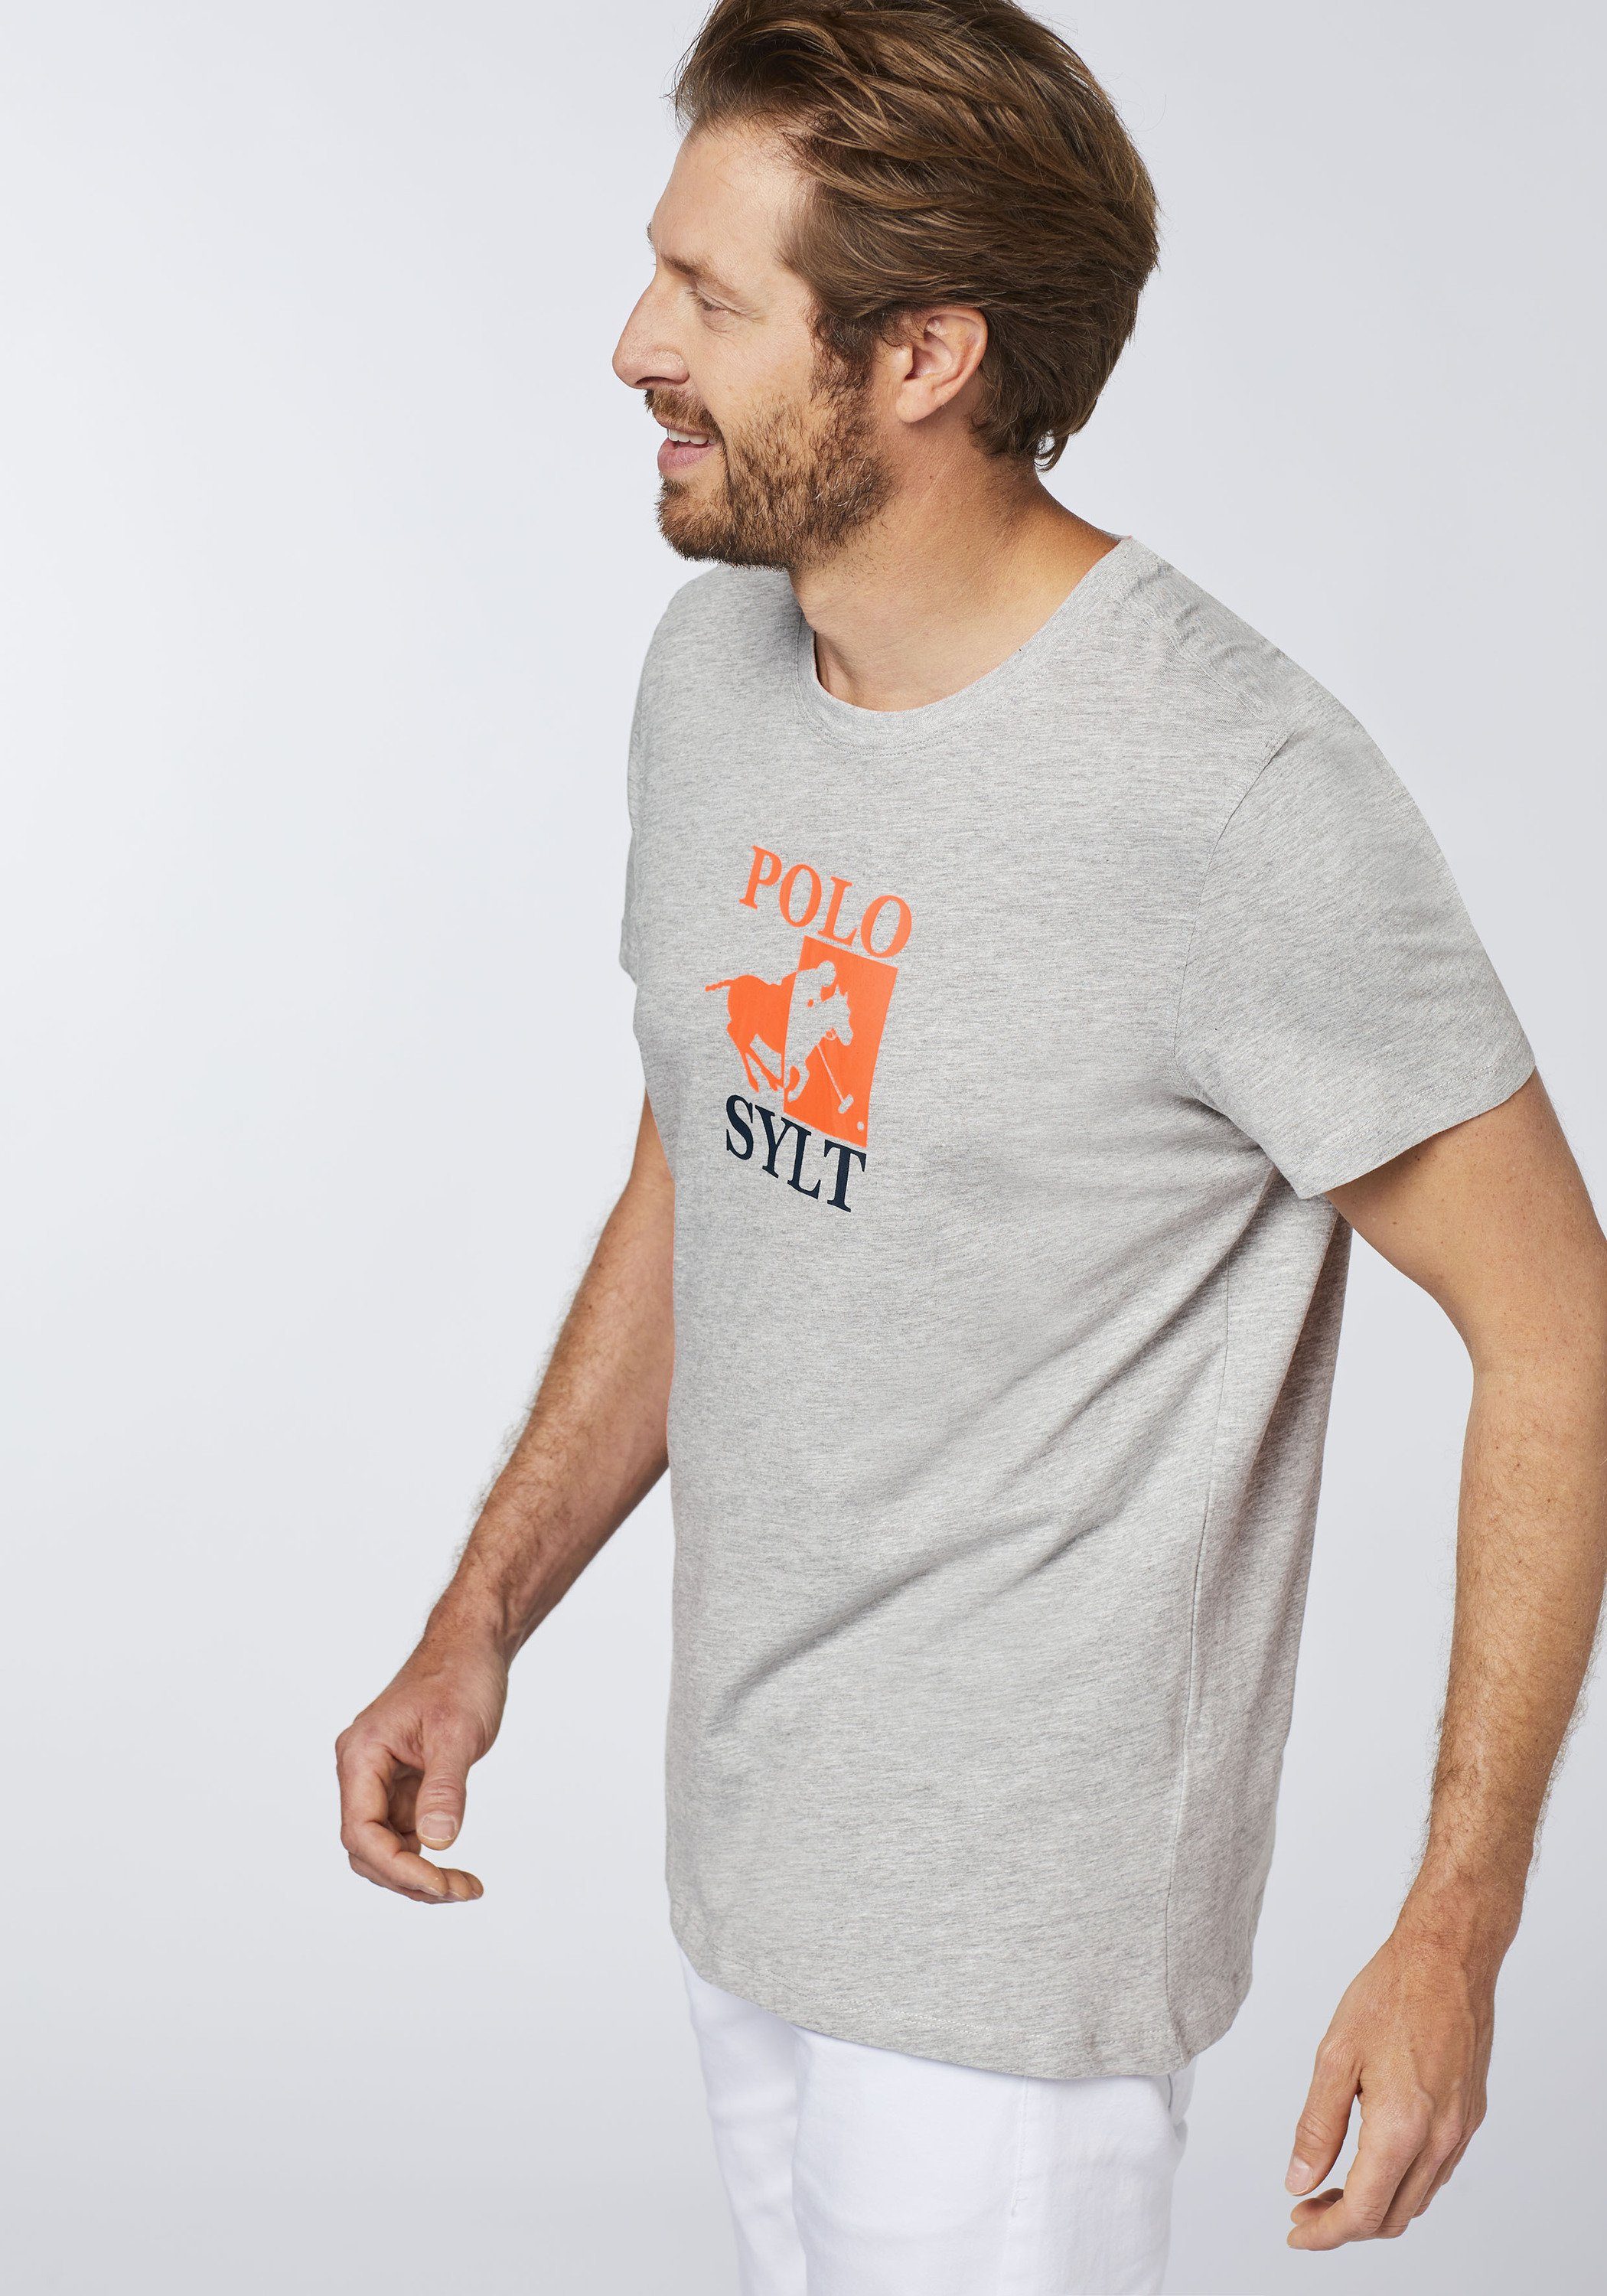 Polo Sylt Print-Shirt mit großem 17-4402M Neutral Gray Logoprint Melange